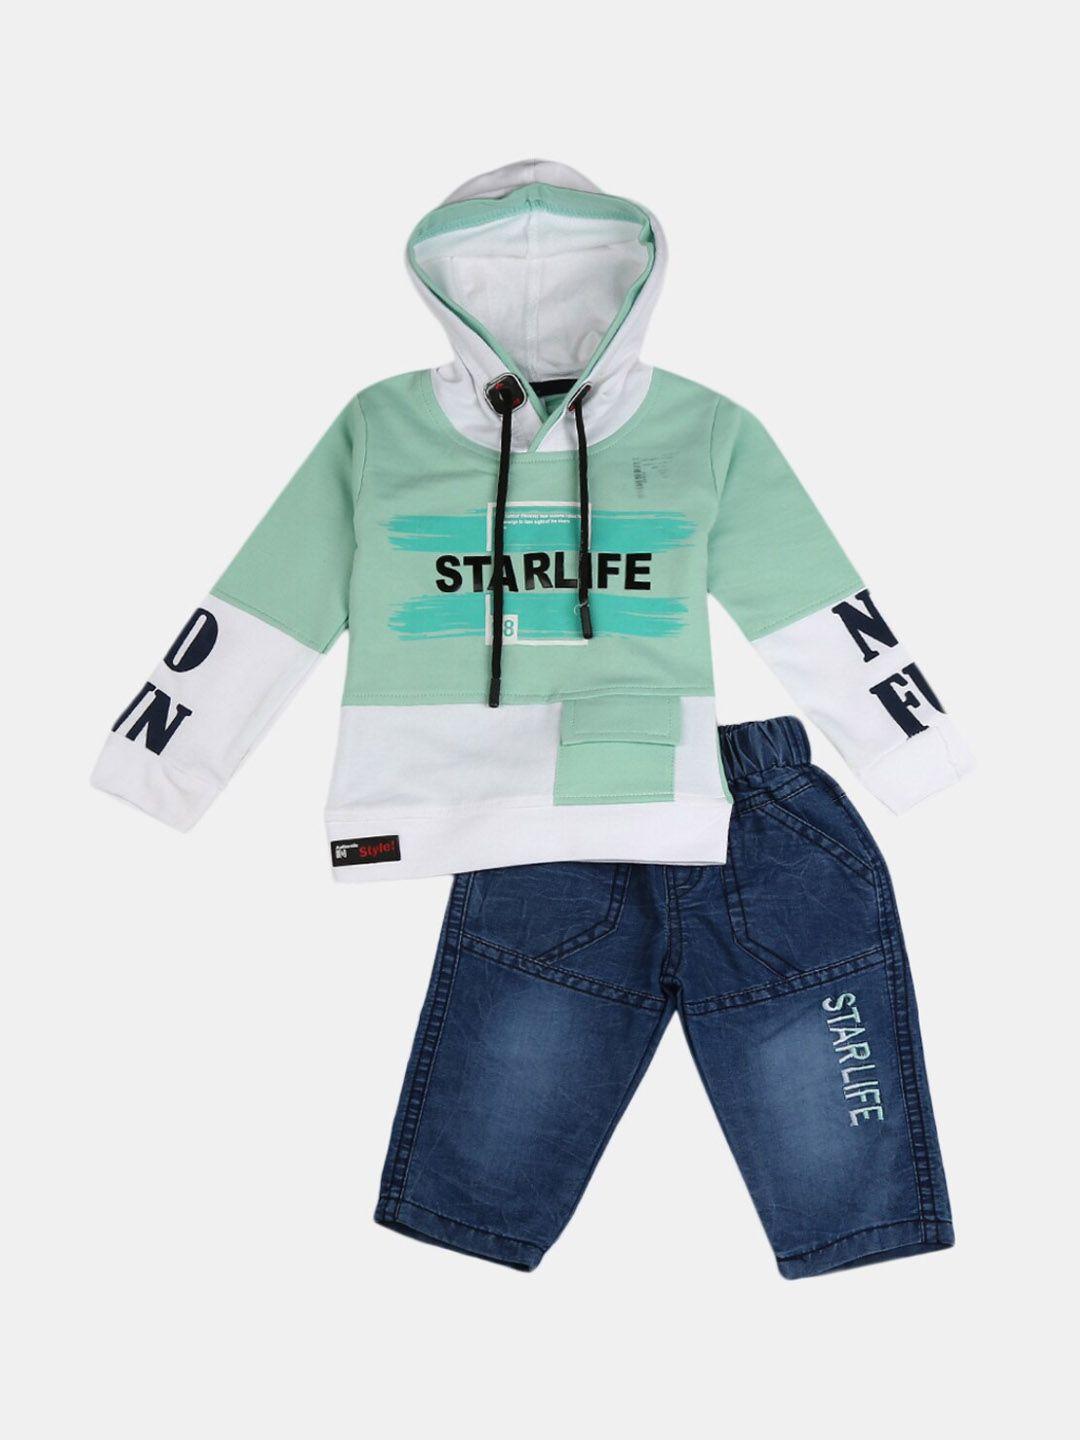 v-mart unisex kids sea green clothing set